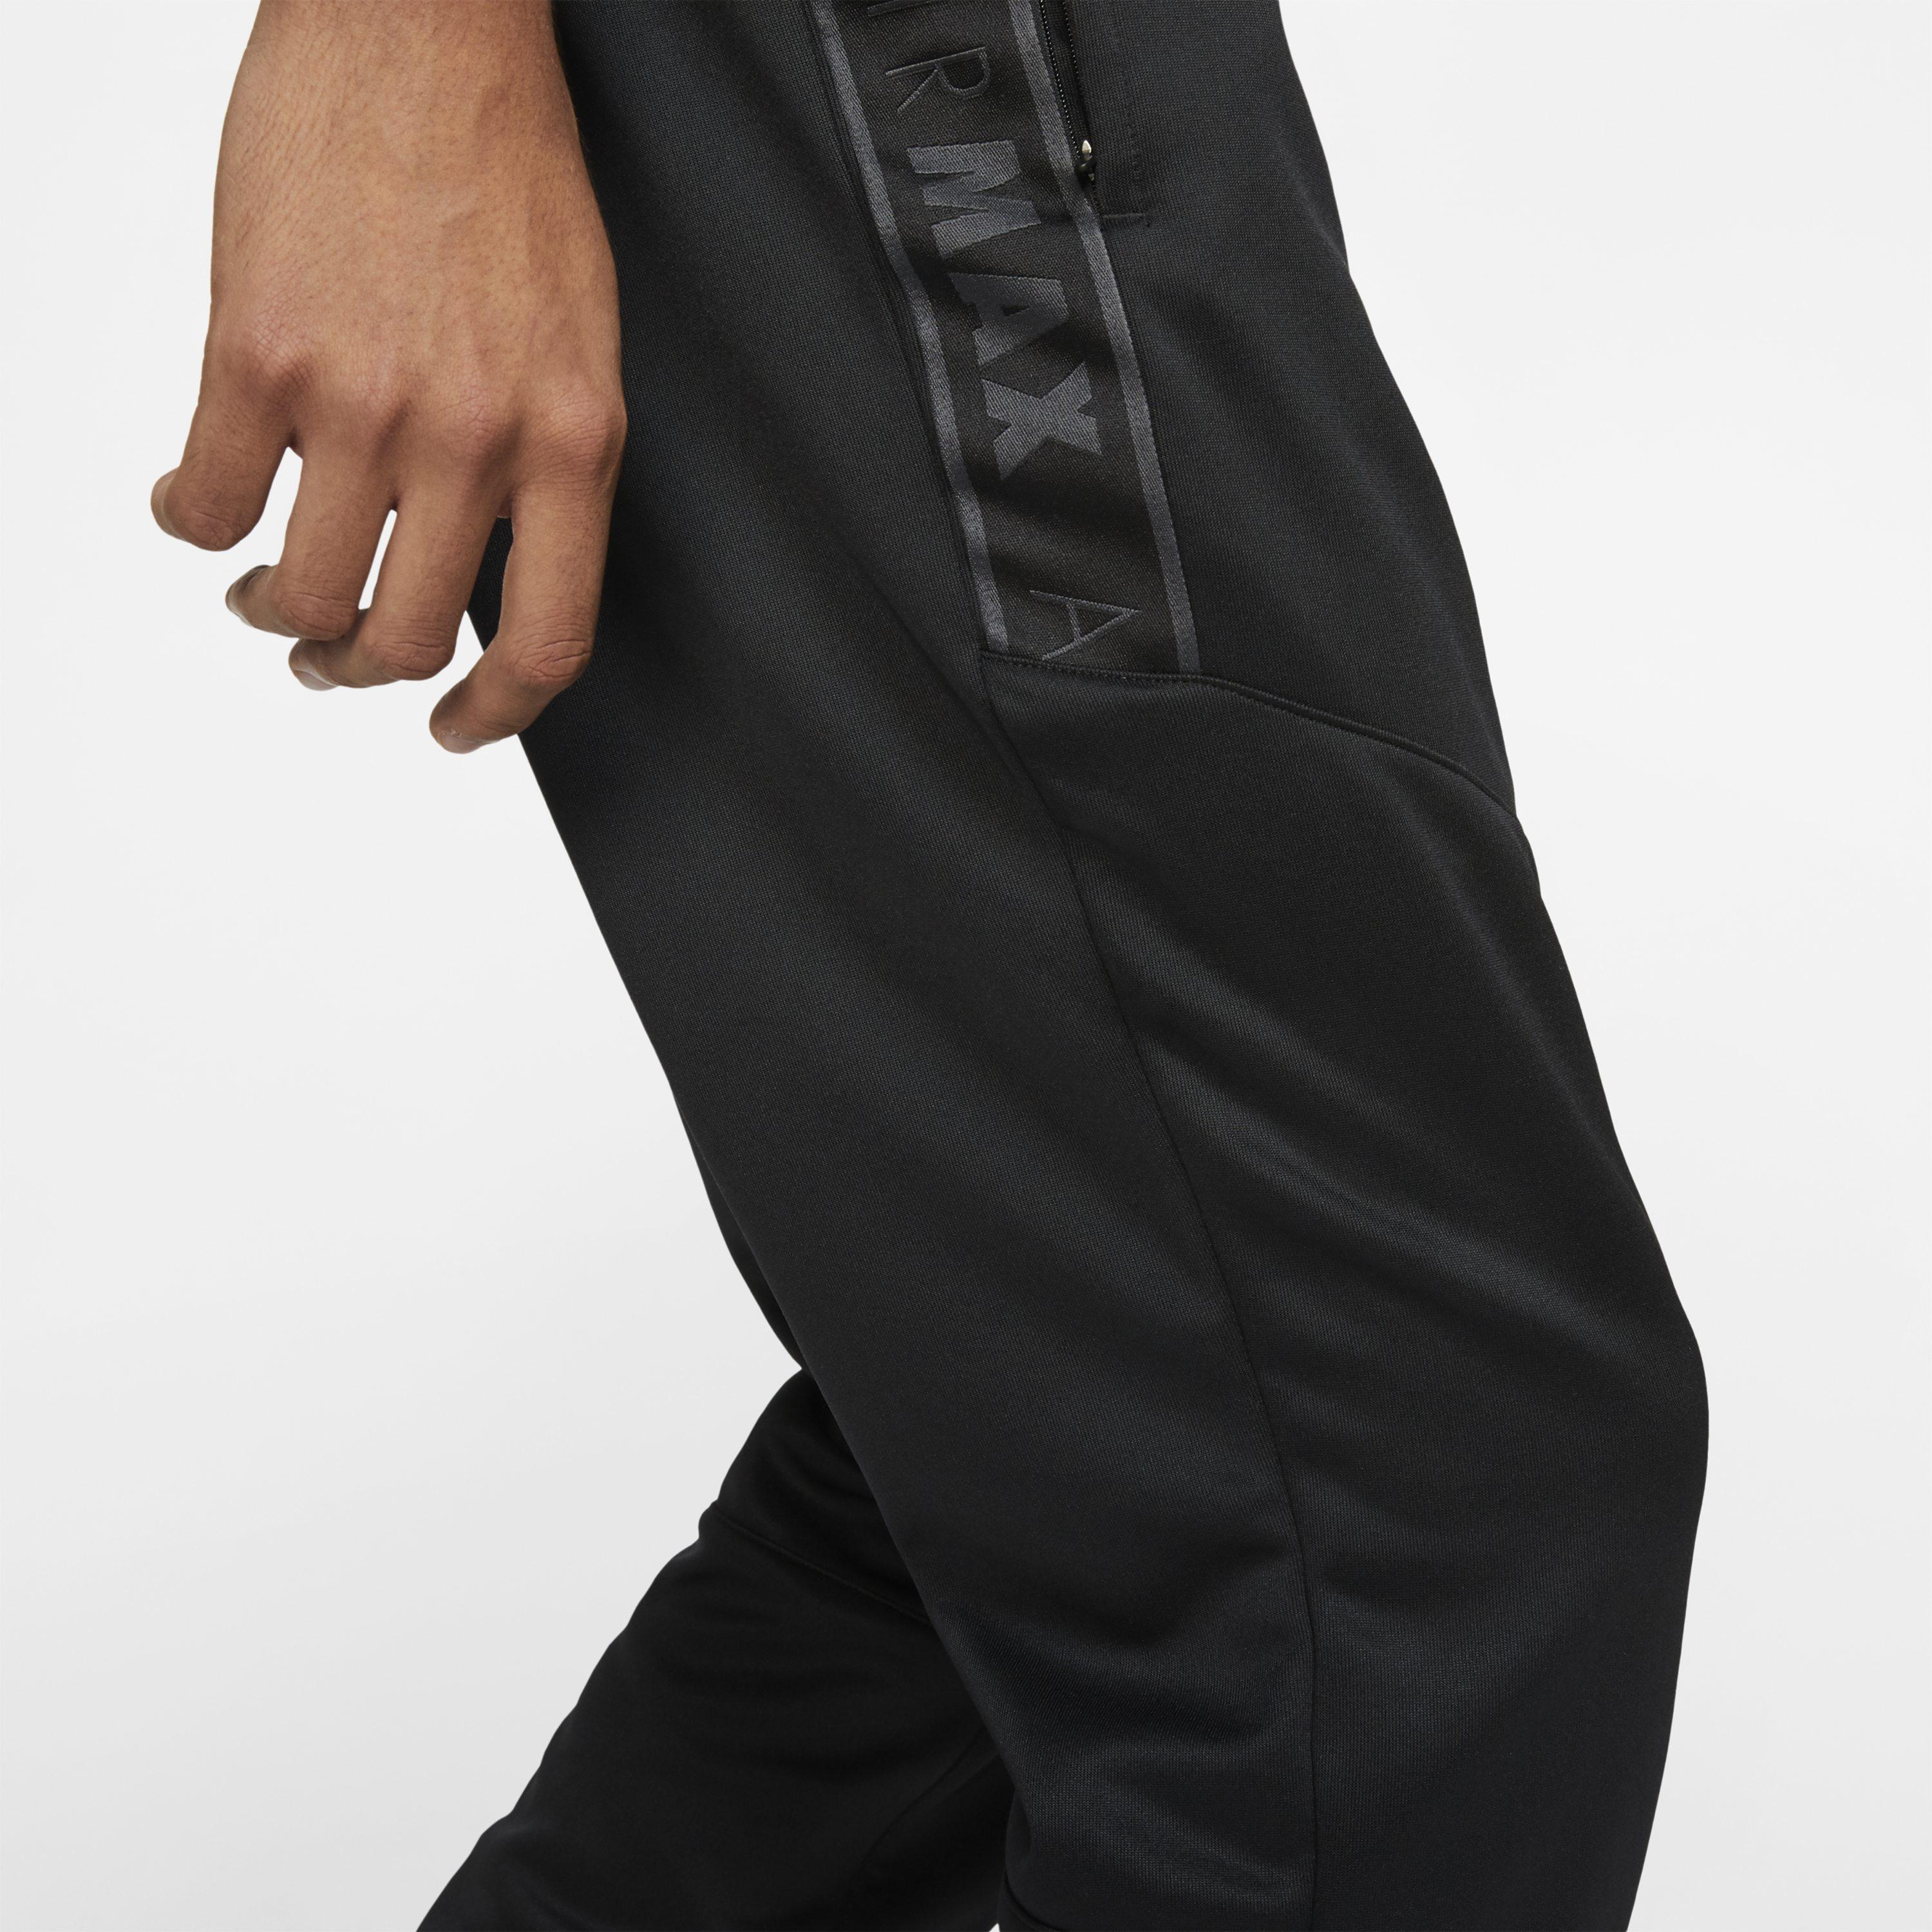 Nike Sportswear Air Max Joggers in Black for Men - Lyst